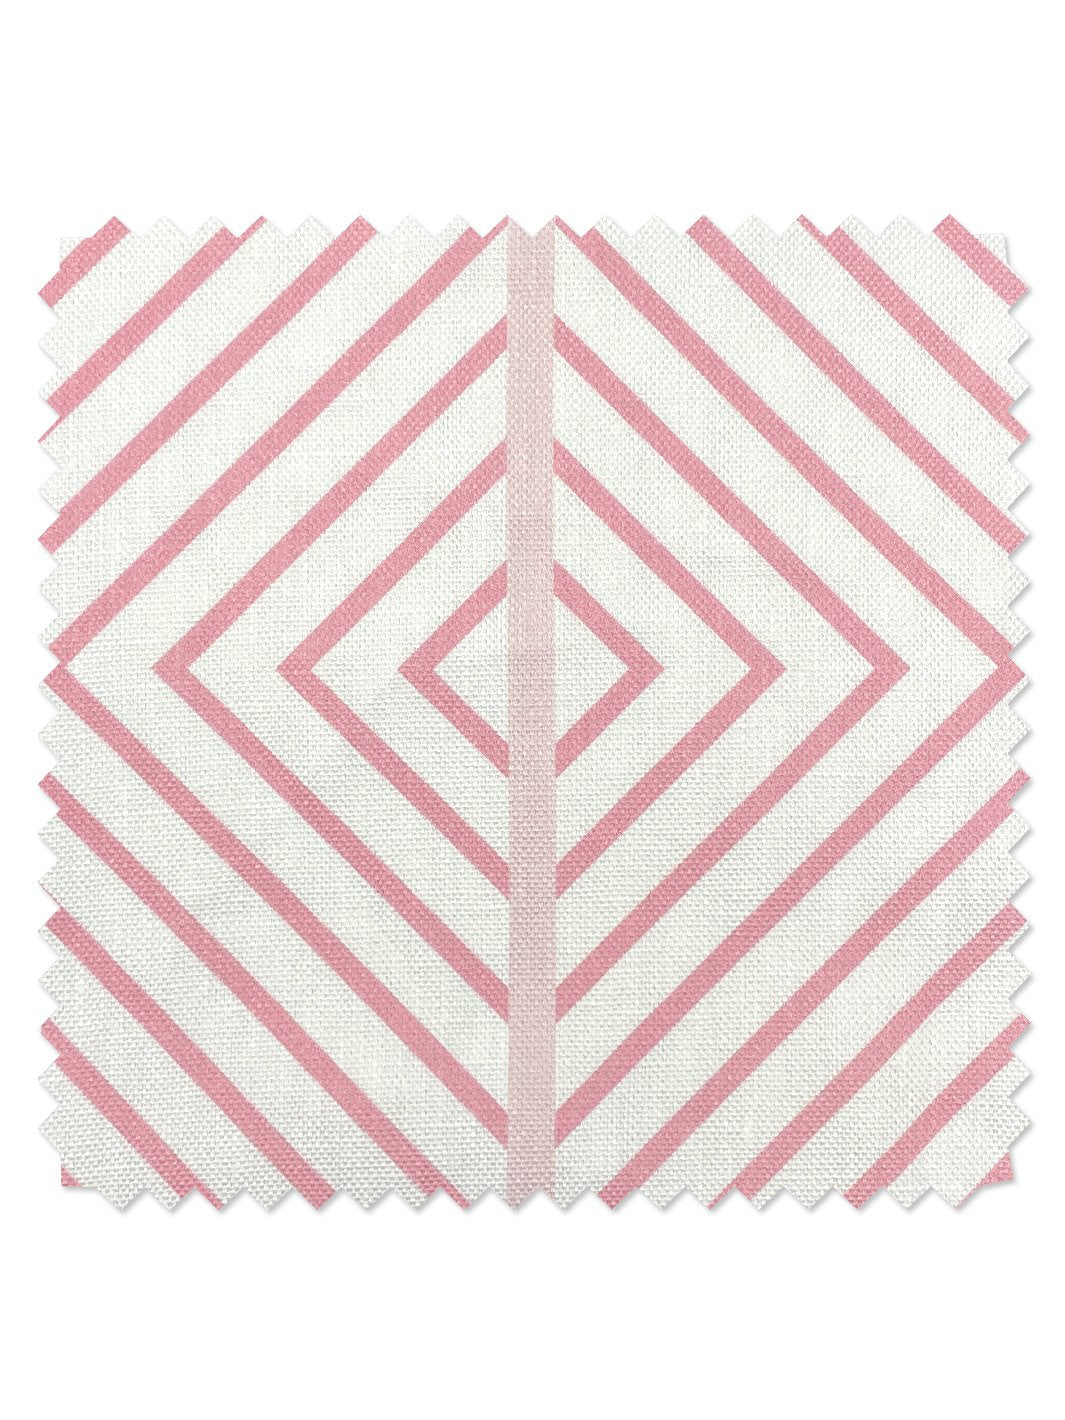 'Fabric by the Yard - Barbie™ Dreamhouse Diamond - Piggy Bank on Flax Linen